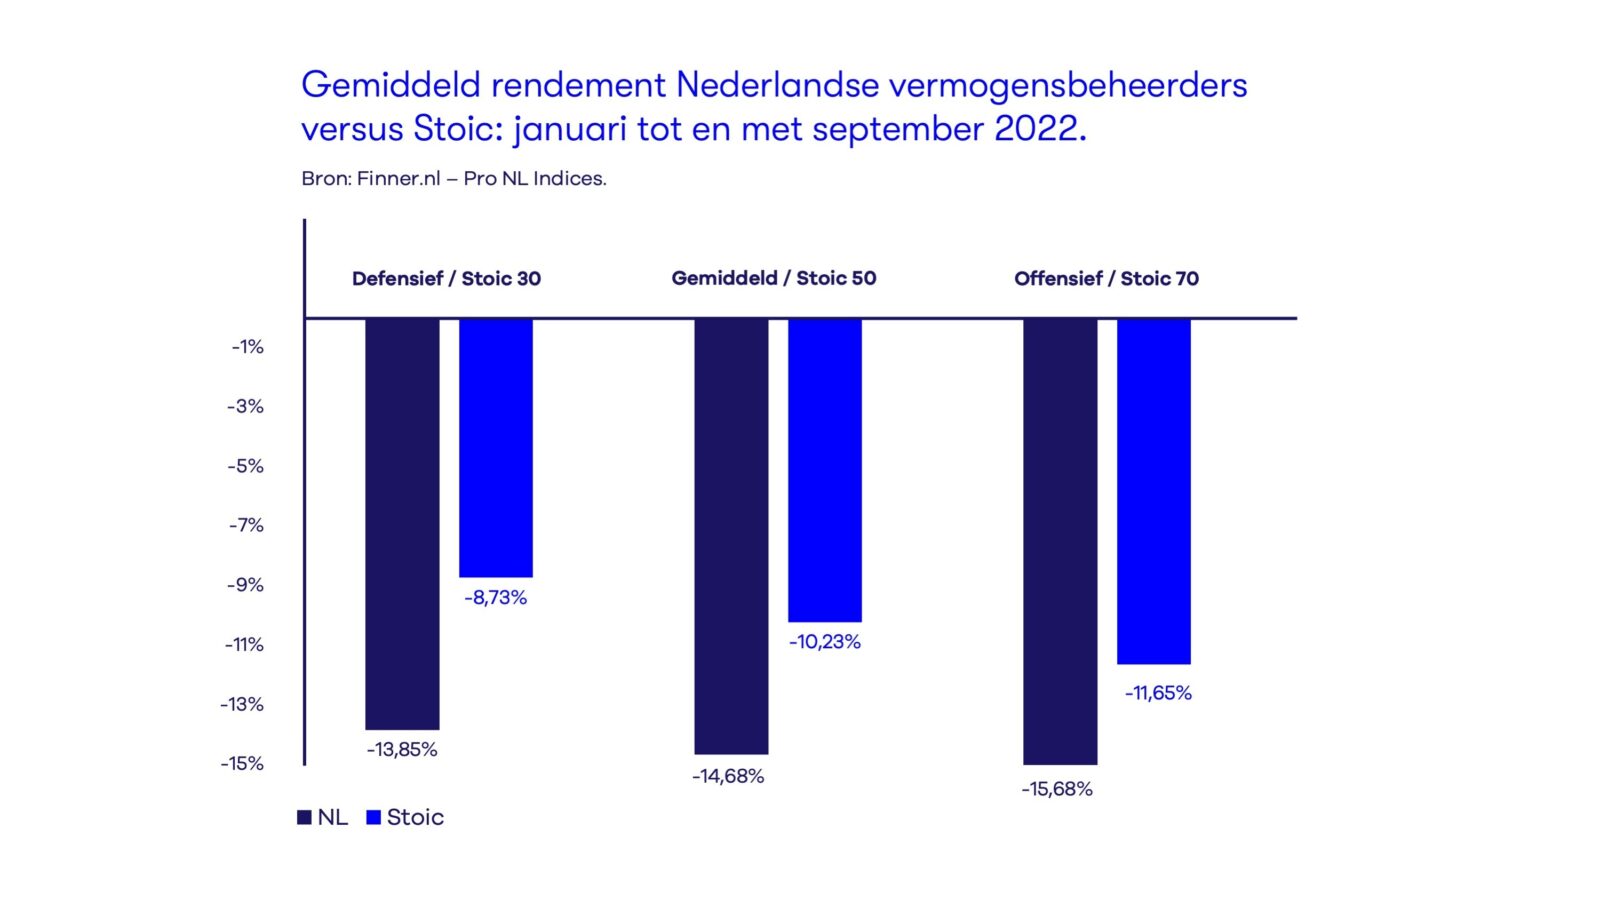 Gemiddeld rendement NL vermogensbeheerders versus Stoic: januari t.m. september 2022